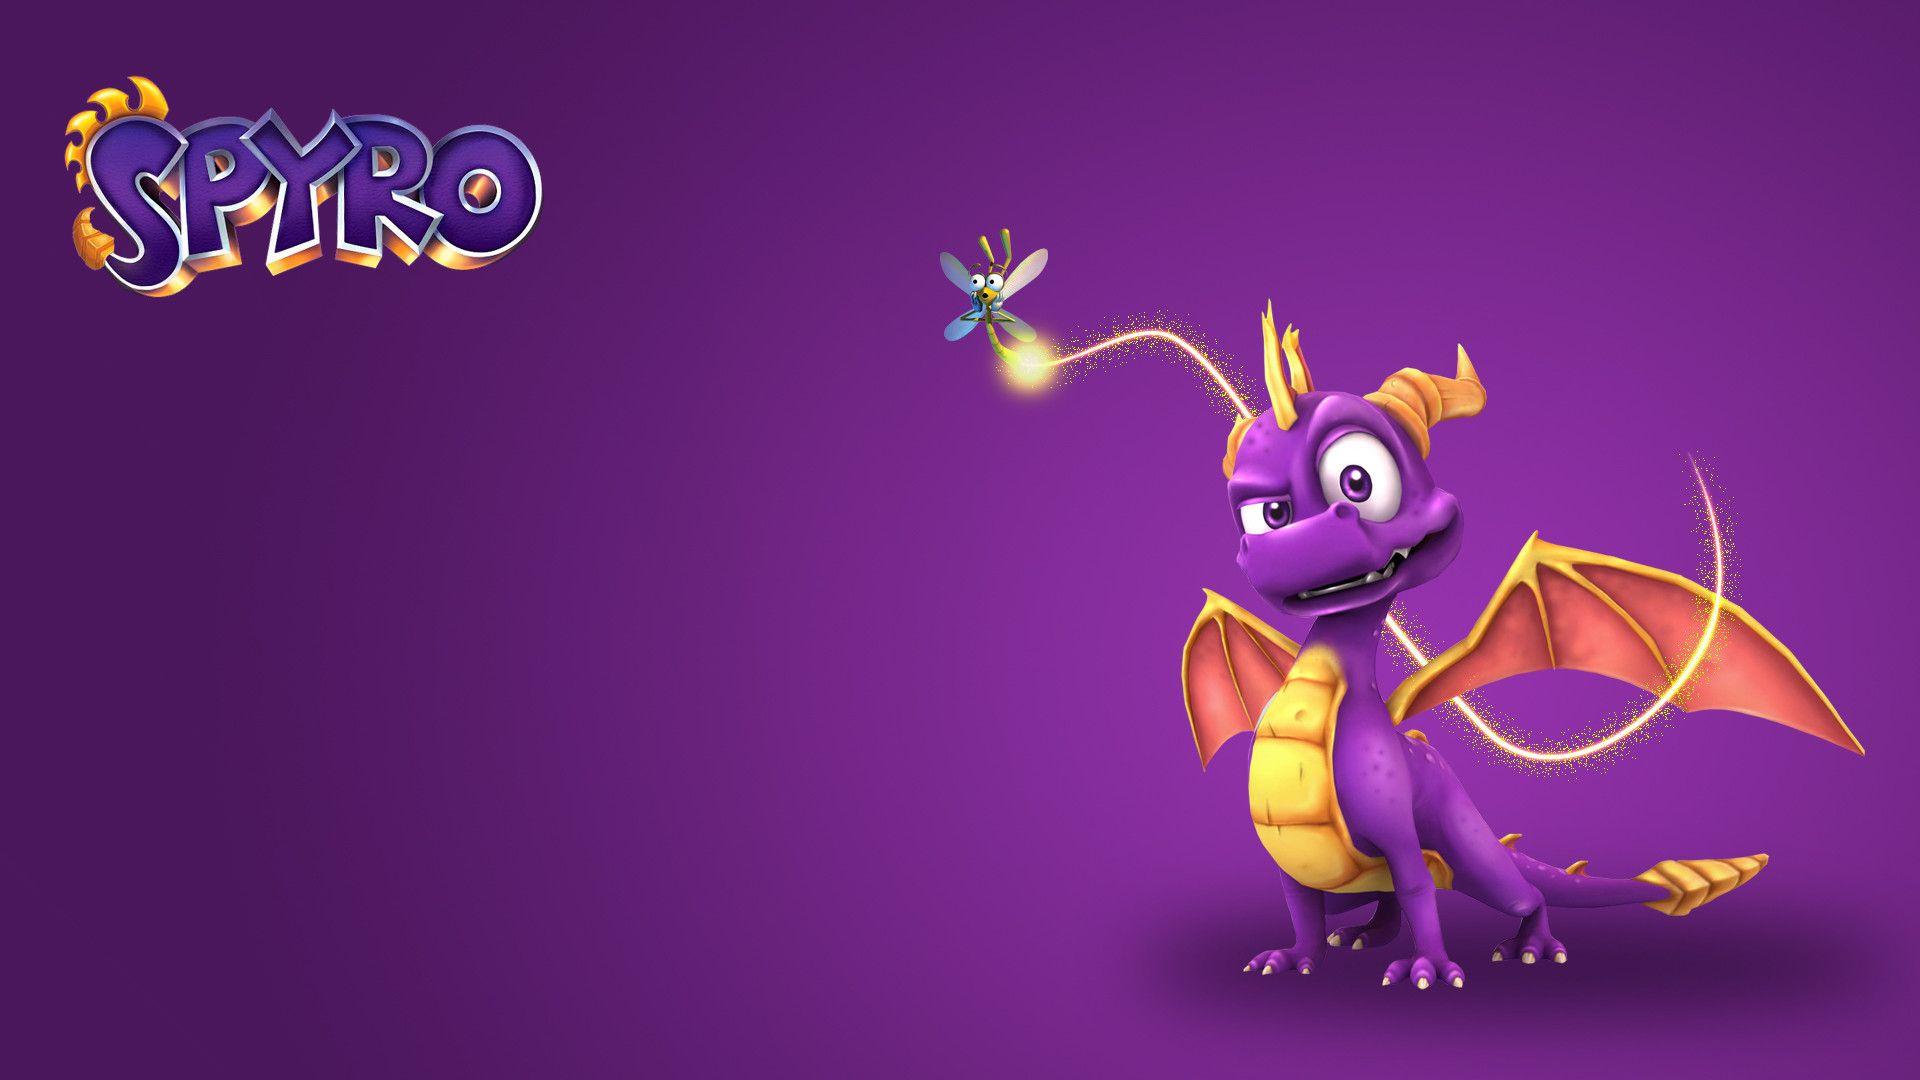 Spyro the Dragon Wallpapers.